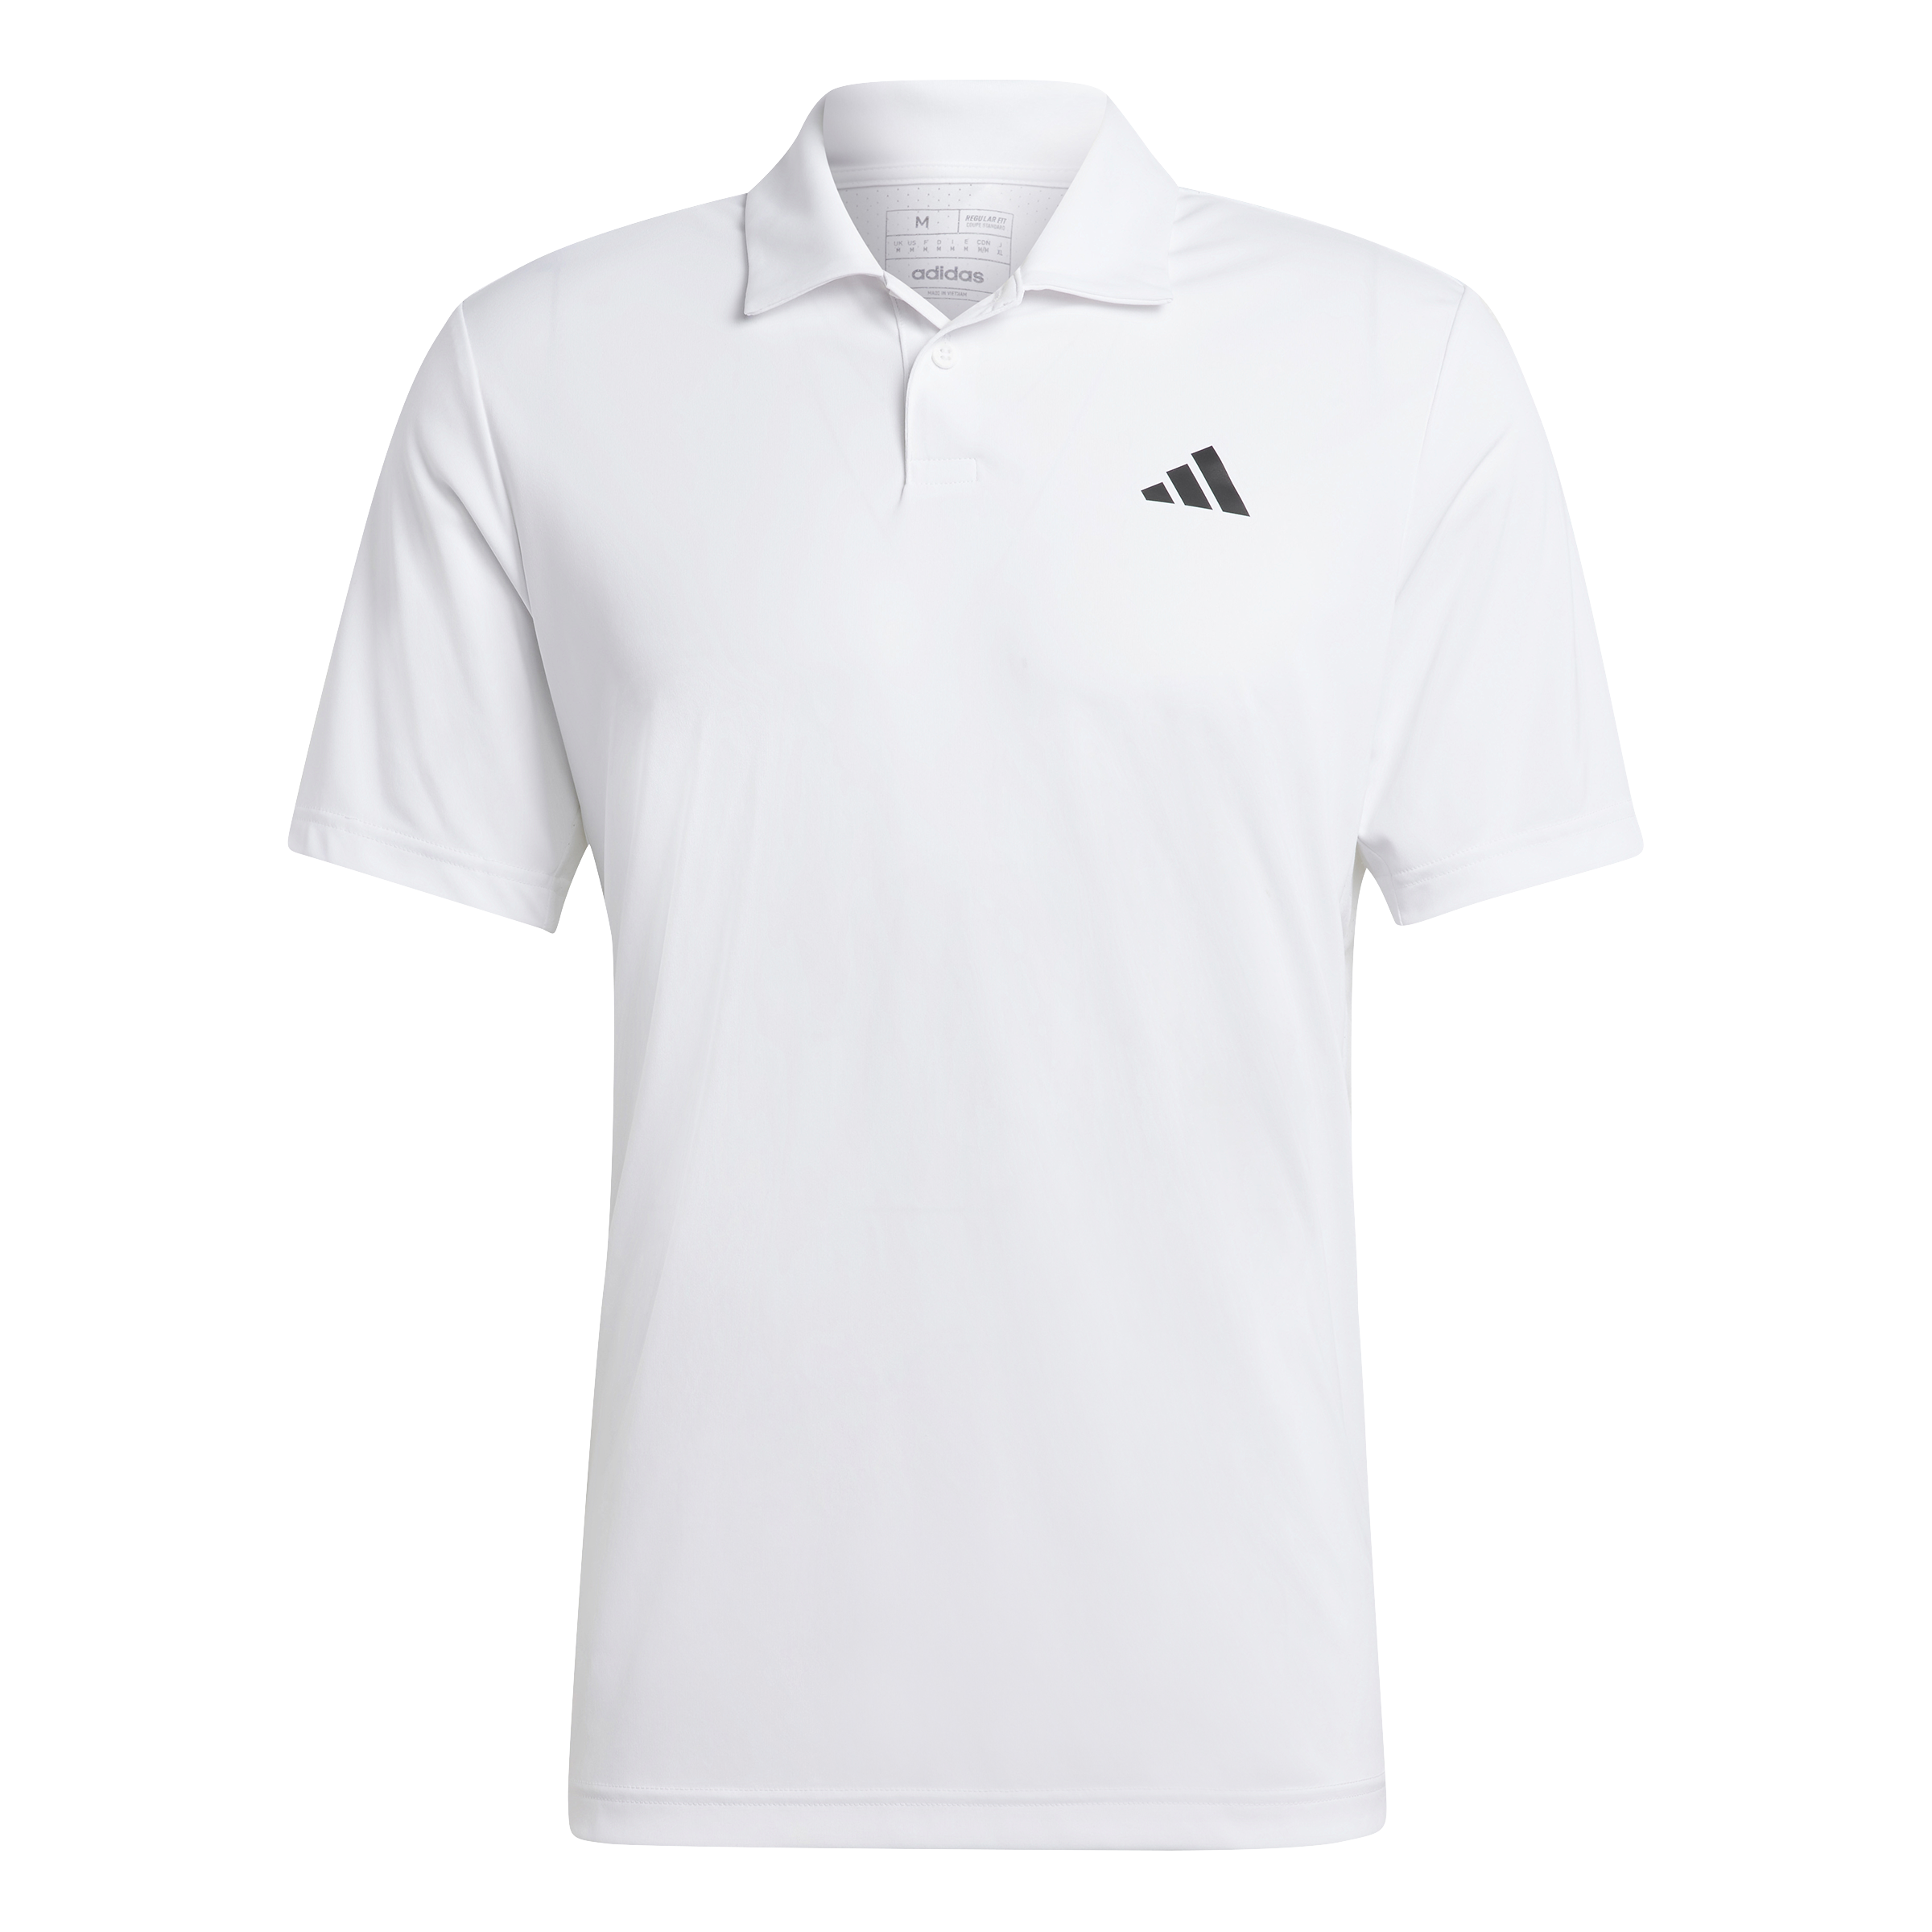 Adidas Club Polo Shirt (White) - XL